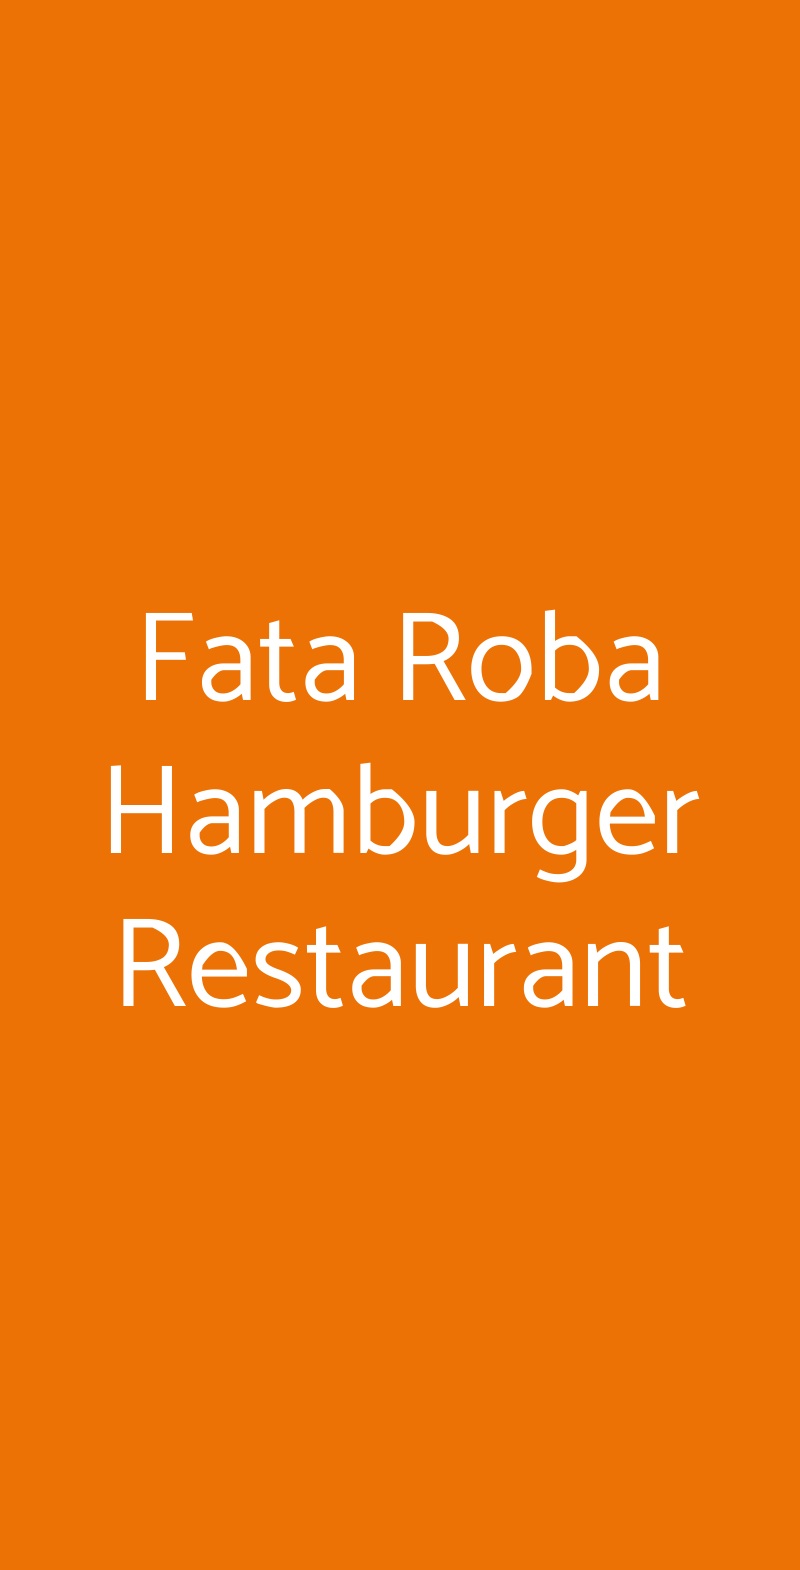 Fata Roba Hamburger Restaurant Fusignano menù 1 pagina